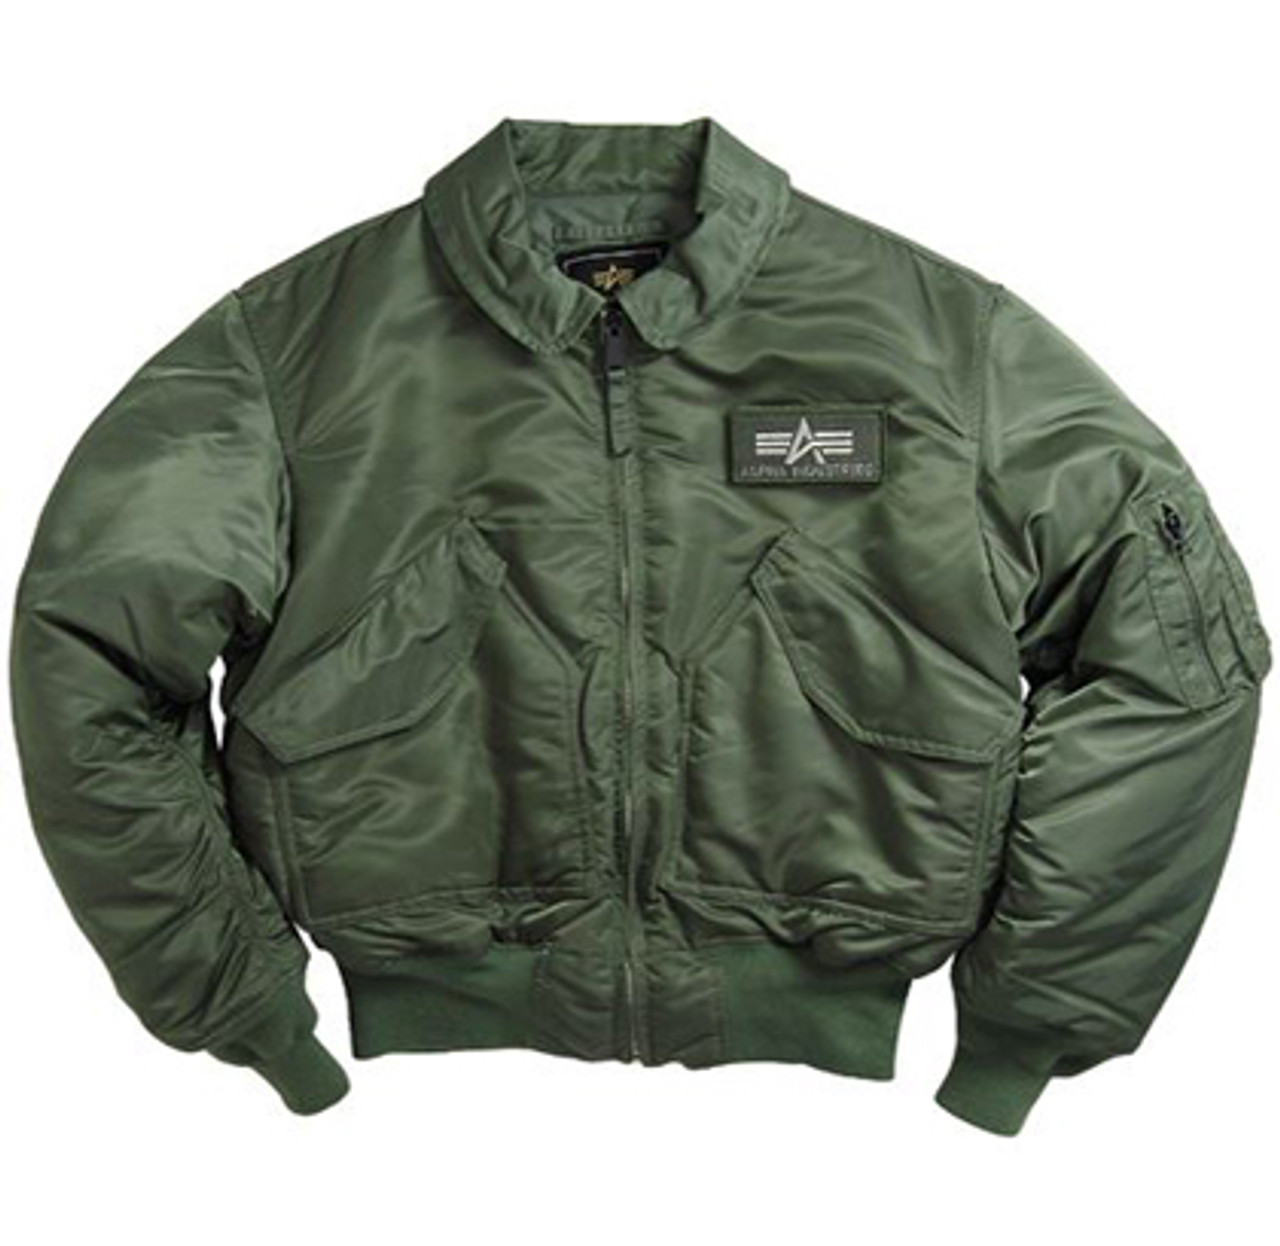 Co CWU Shop Fatigues Flight Jackets Gear - Navy Army 45/P Alpha